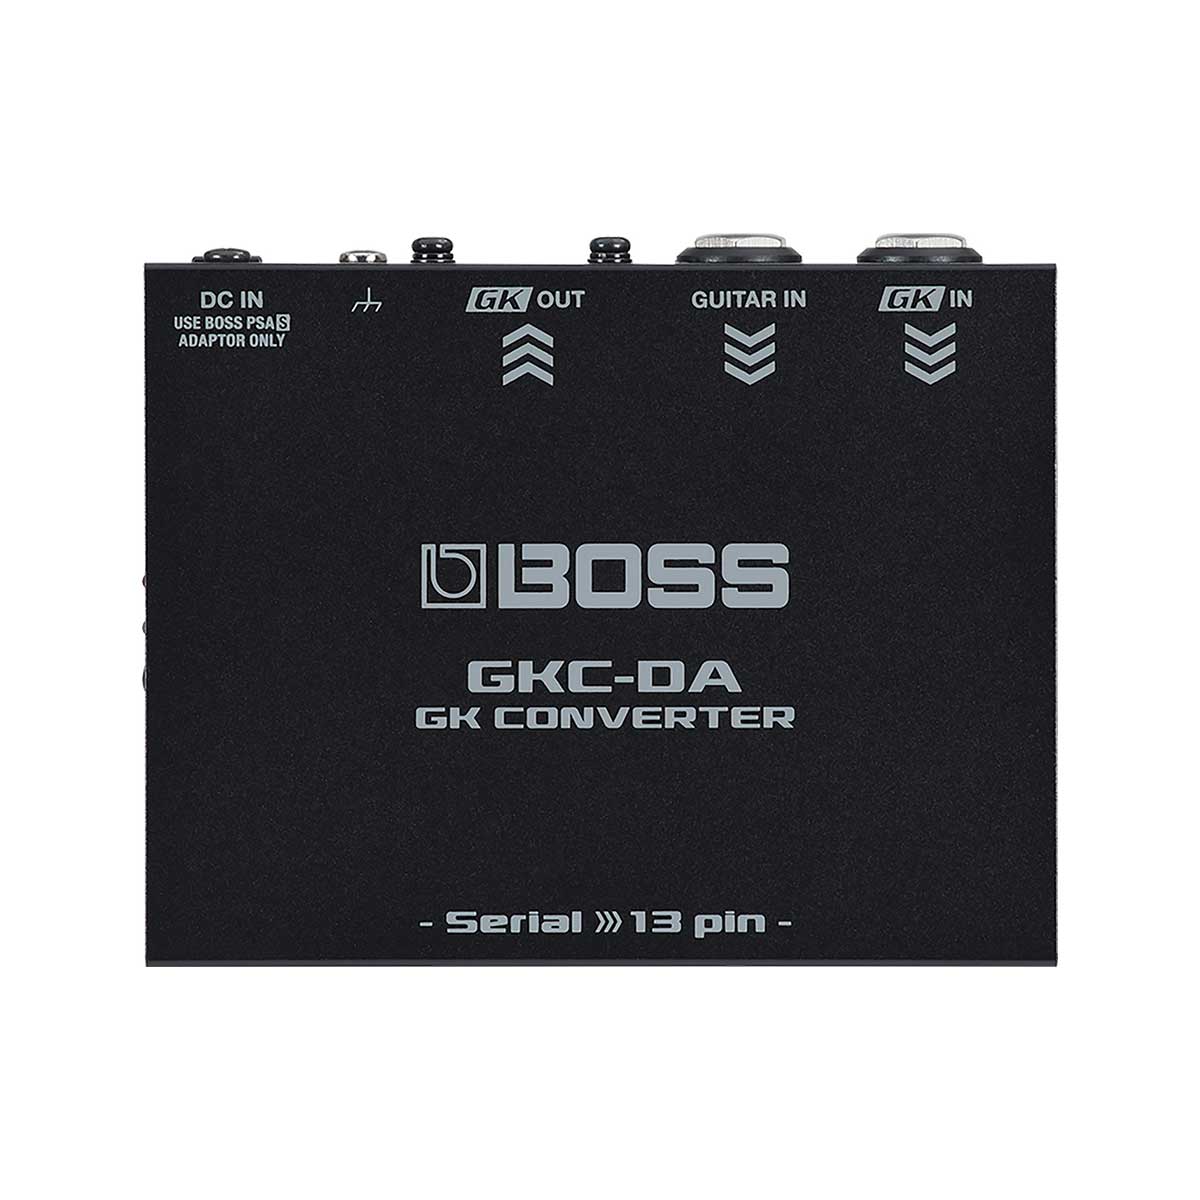 BOSS GKC-DA Electric Guitar Convertor